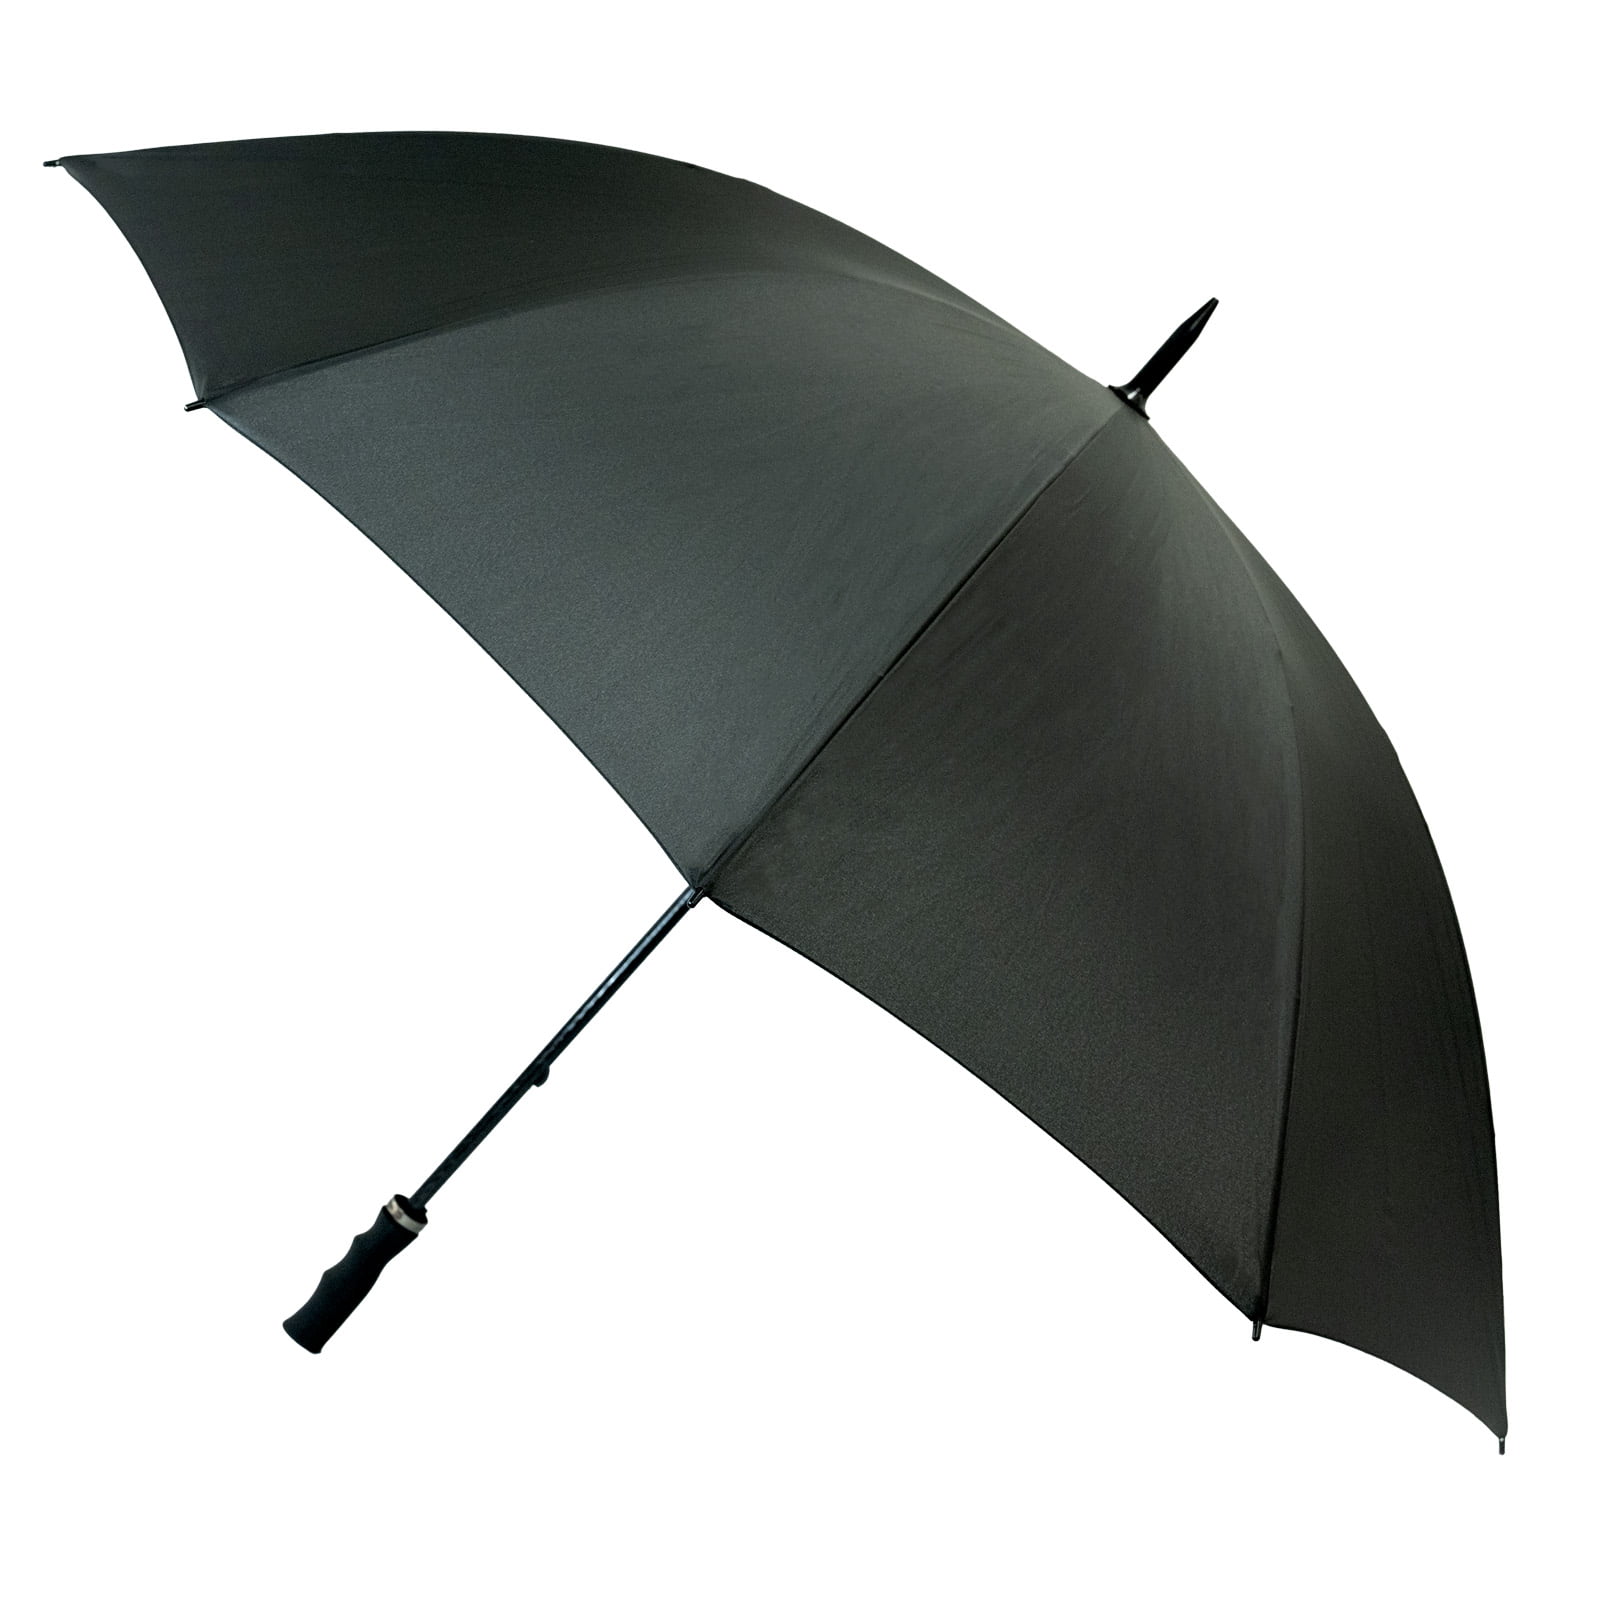 A black golf umbrella, part of our StormStar range of windproof golf umbrellas, here in black.